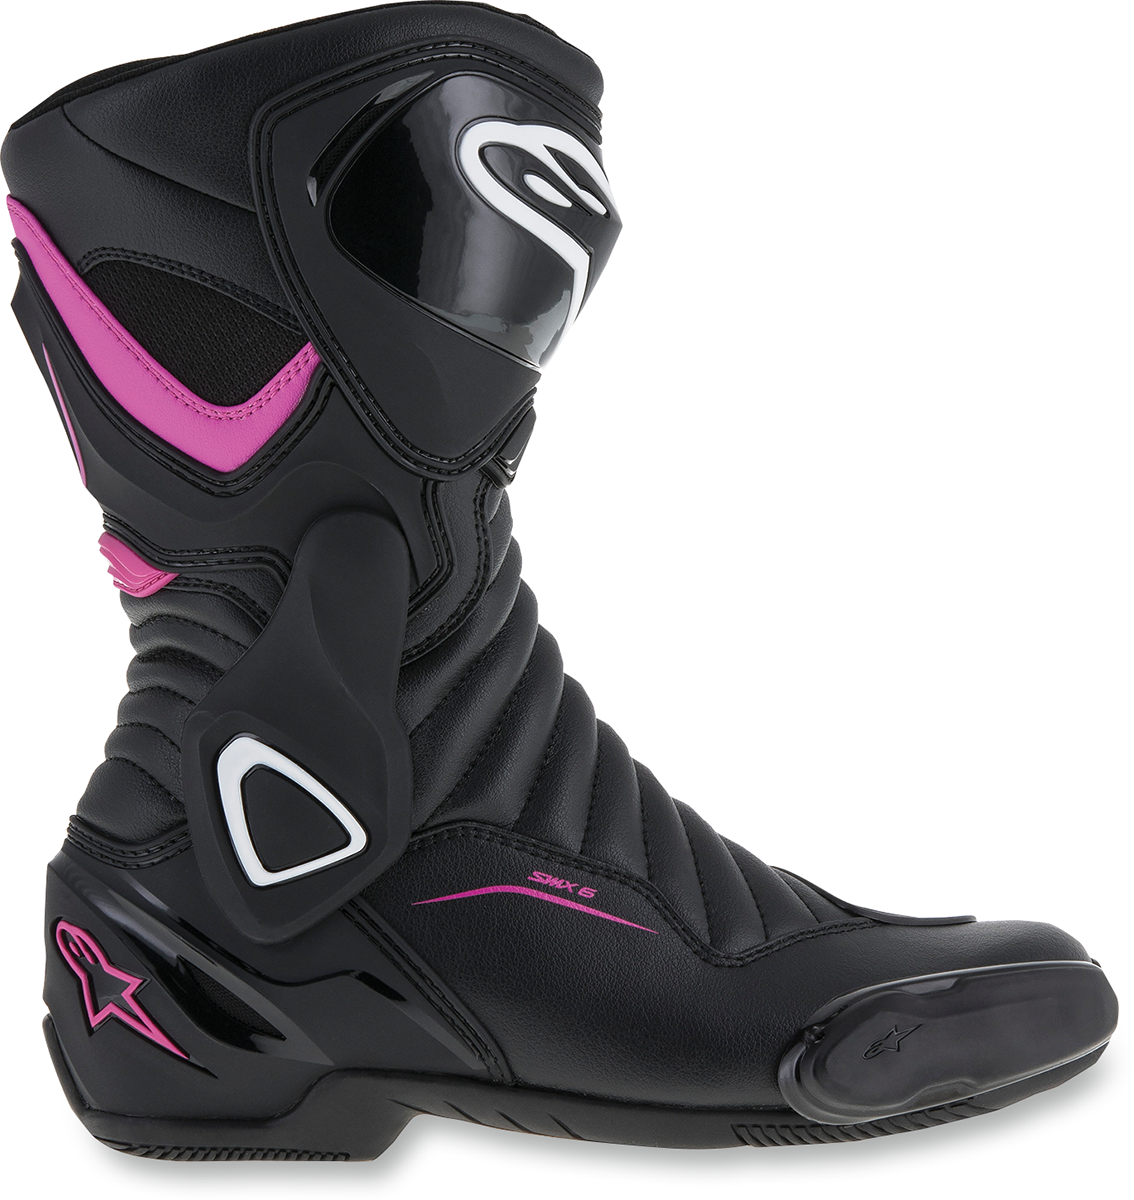 ALPINESTARS SMX-6 v2 Vented Boots - Black/Pink/White - US 5.5 / EU 36 2223117-1132-36